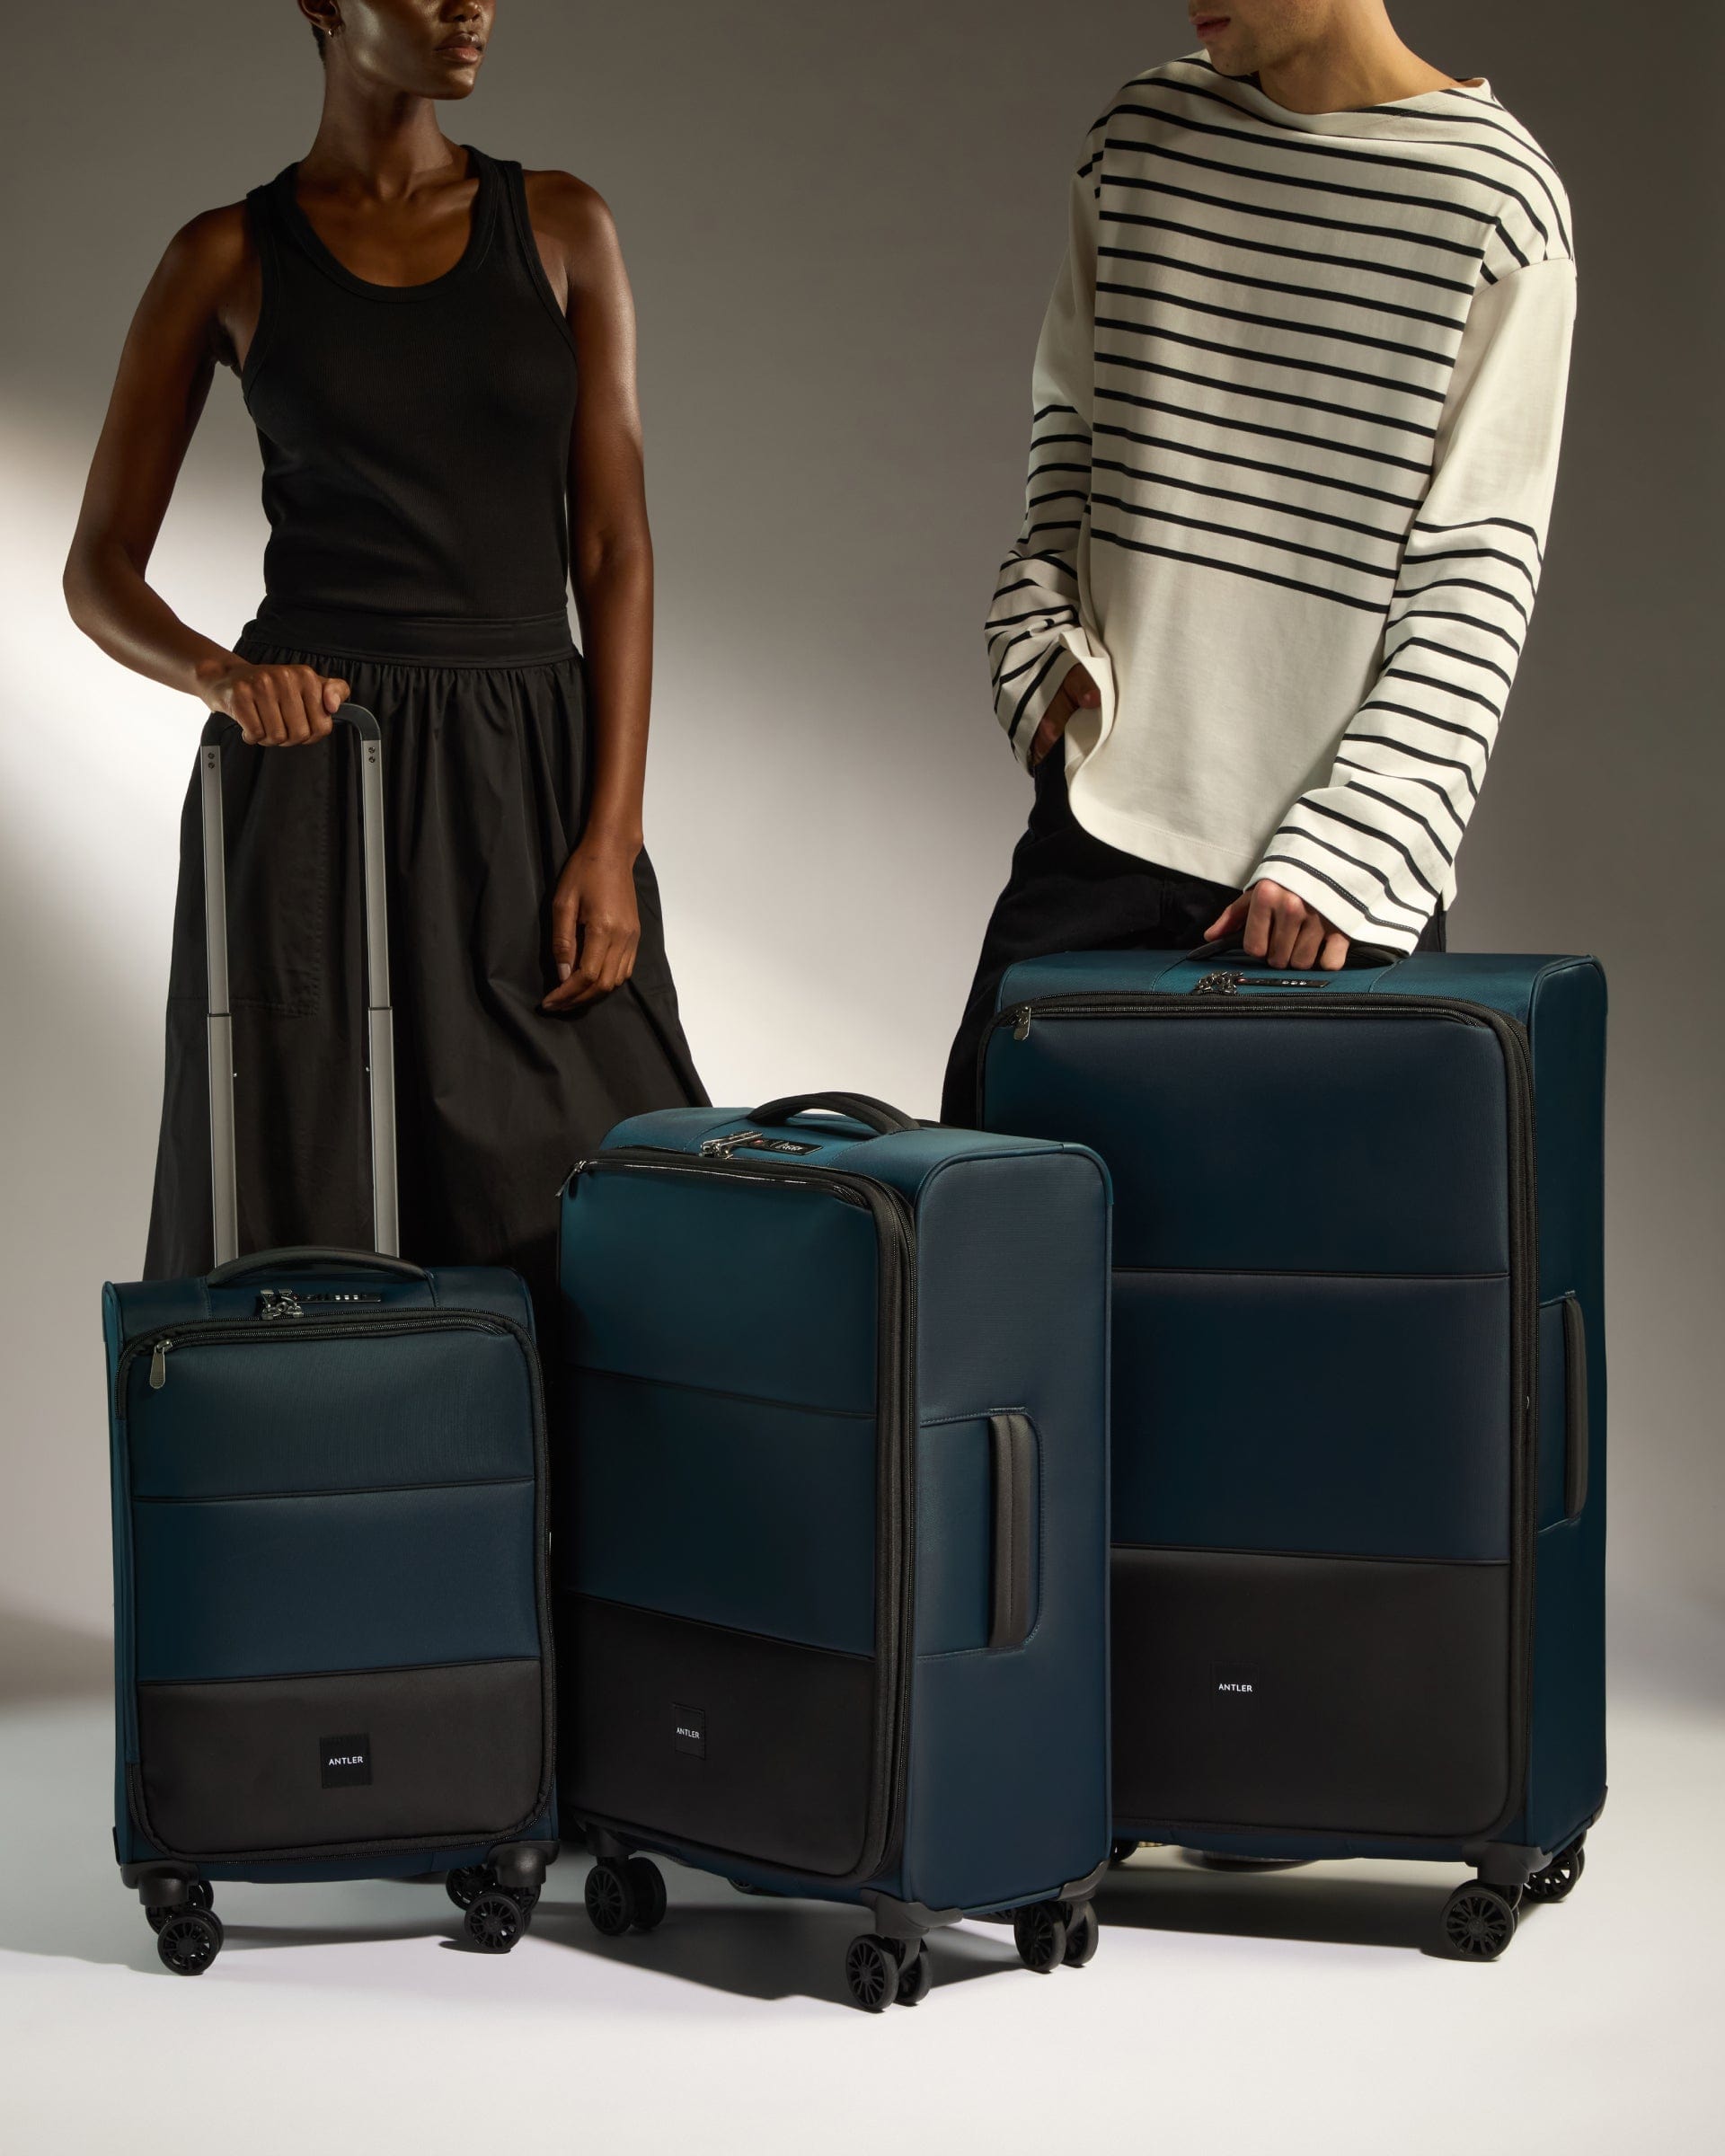 Antler Luggage -  Soft Stripe Set in Indigo - Soft Suitcase Soft Stripe Set in Indigo | Soft Suitcase